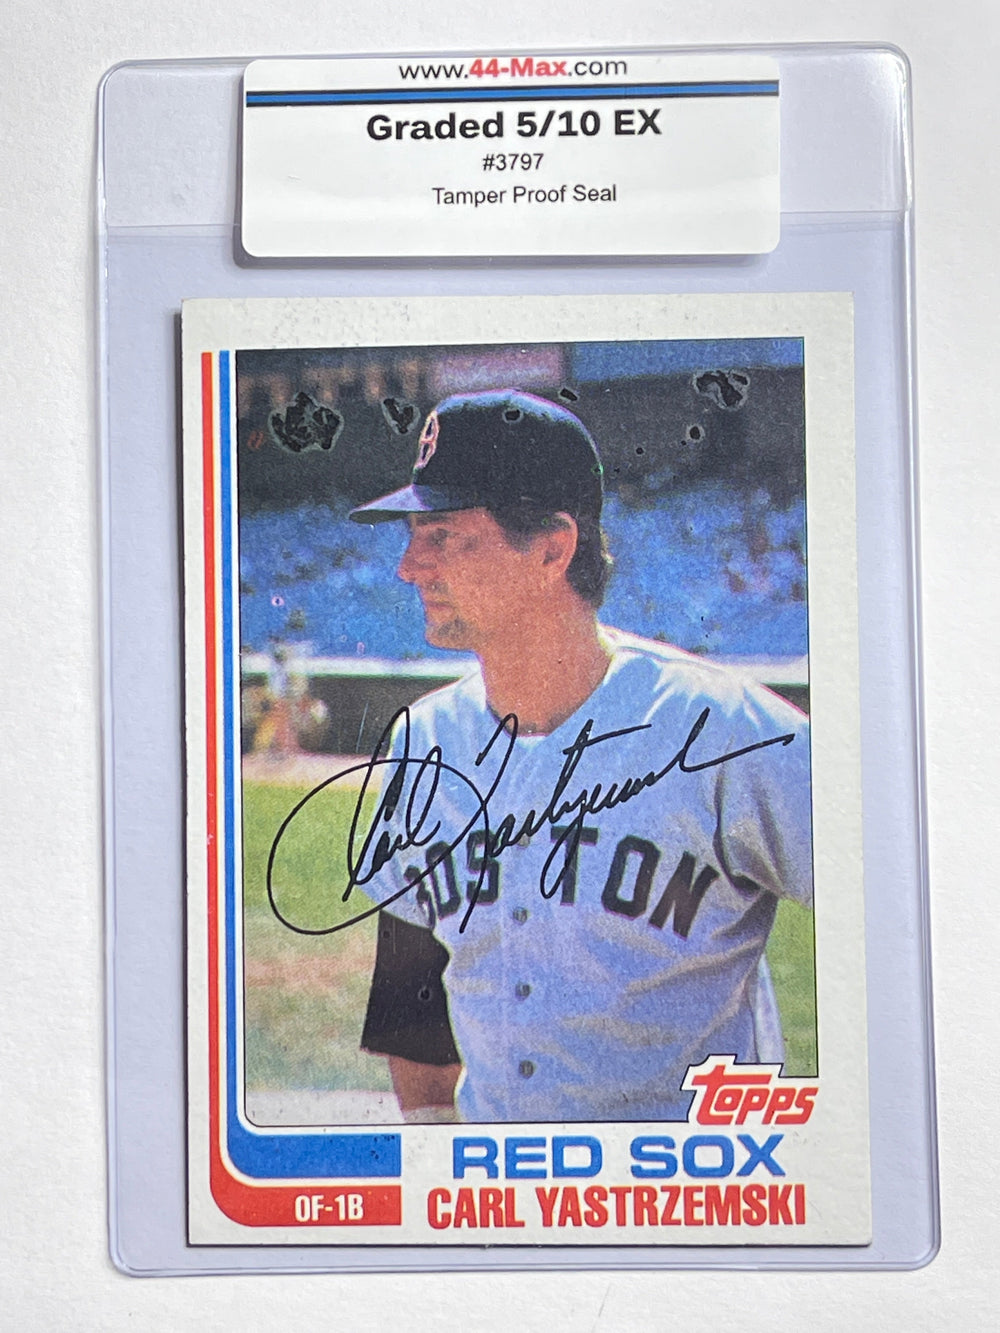 Carl Yastrzemski 1982 Topps Baseball Card. 44-Max 5/10 EX #3797